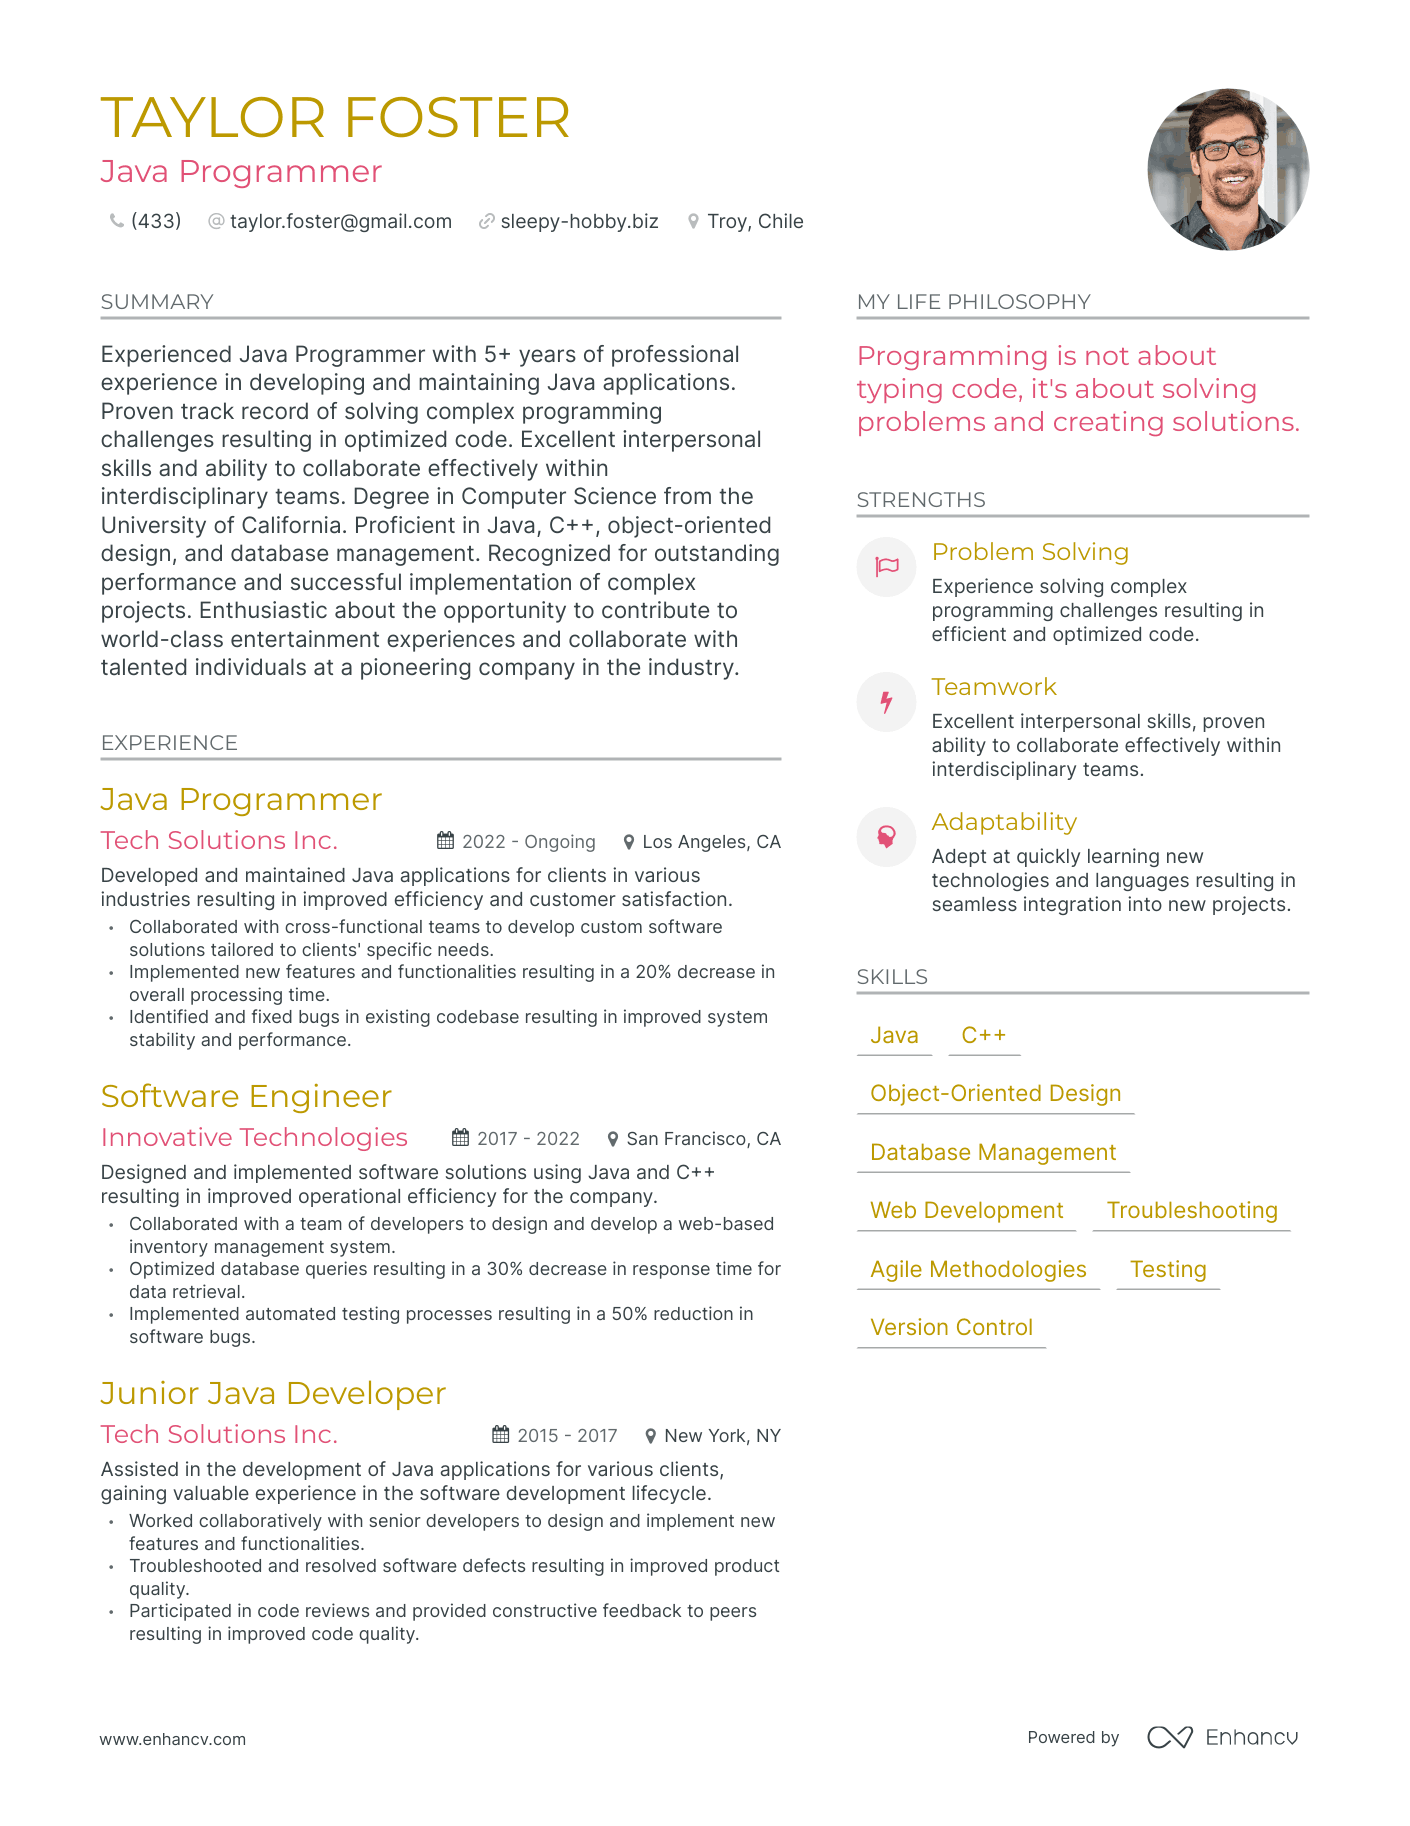 Java Programmer resume example